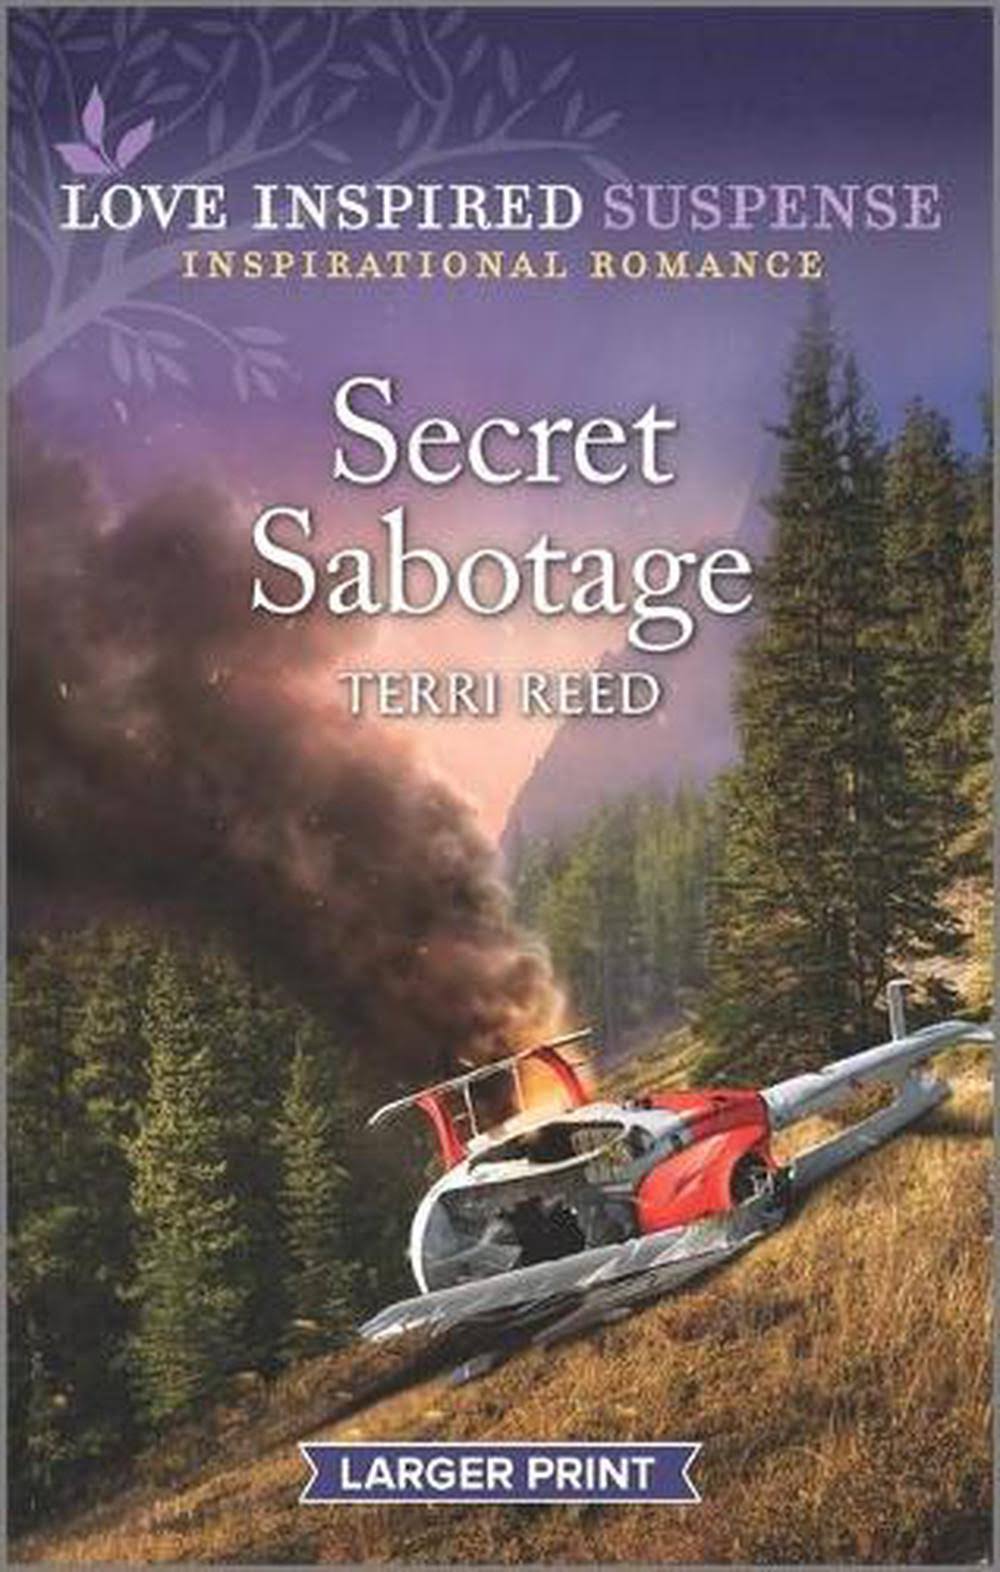 Secret Sabotage by Terri Reed